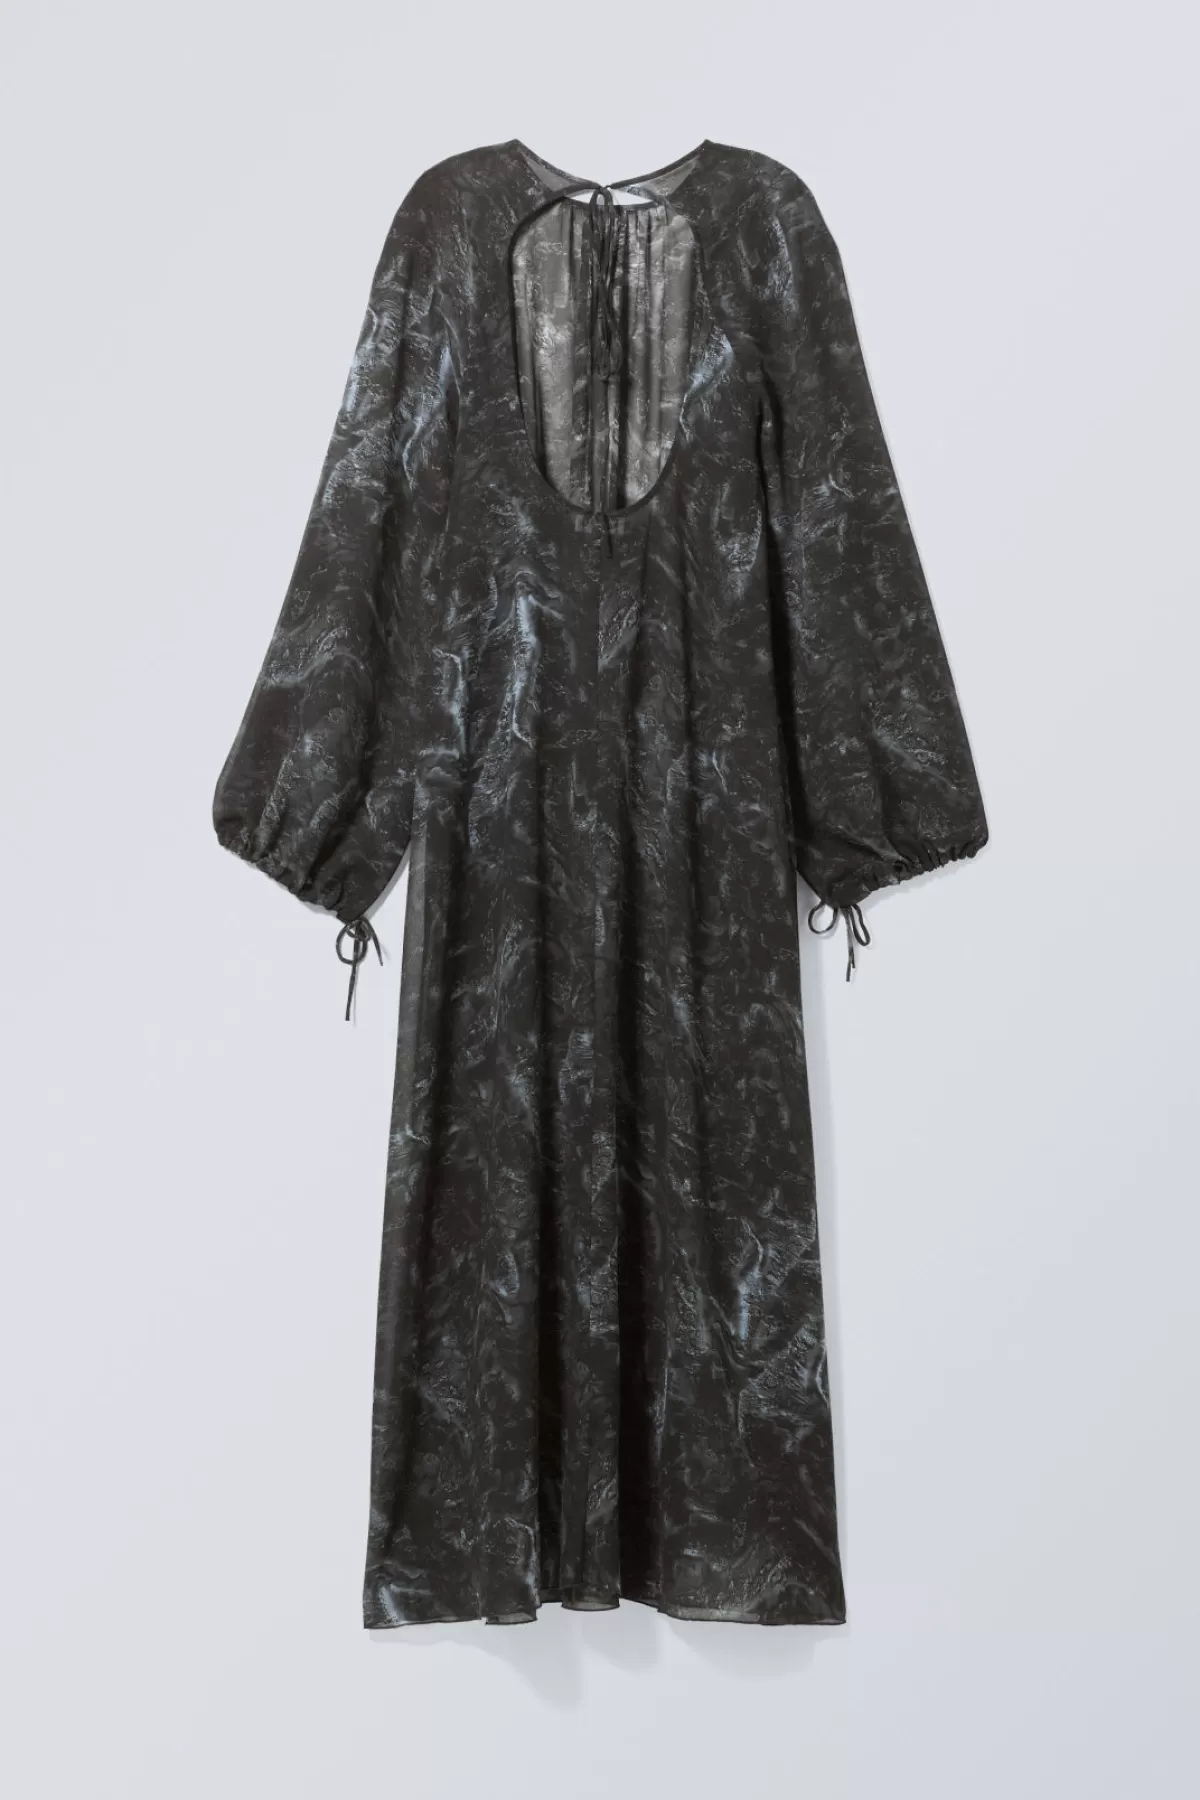 Weekday Maeve Oversized Dress Black Printed Lace Flash Sale